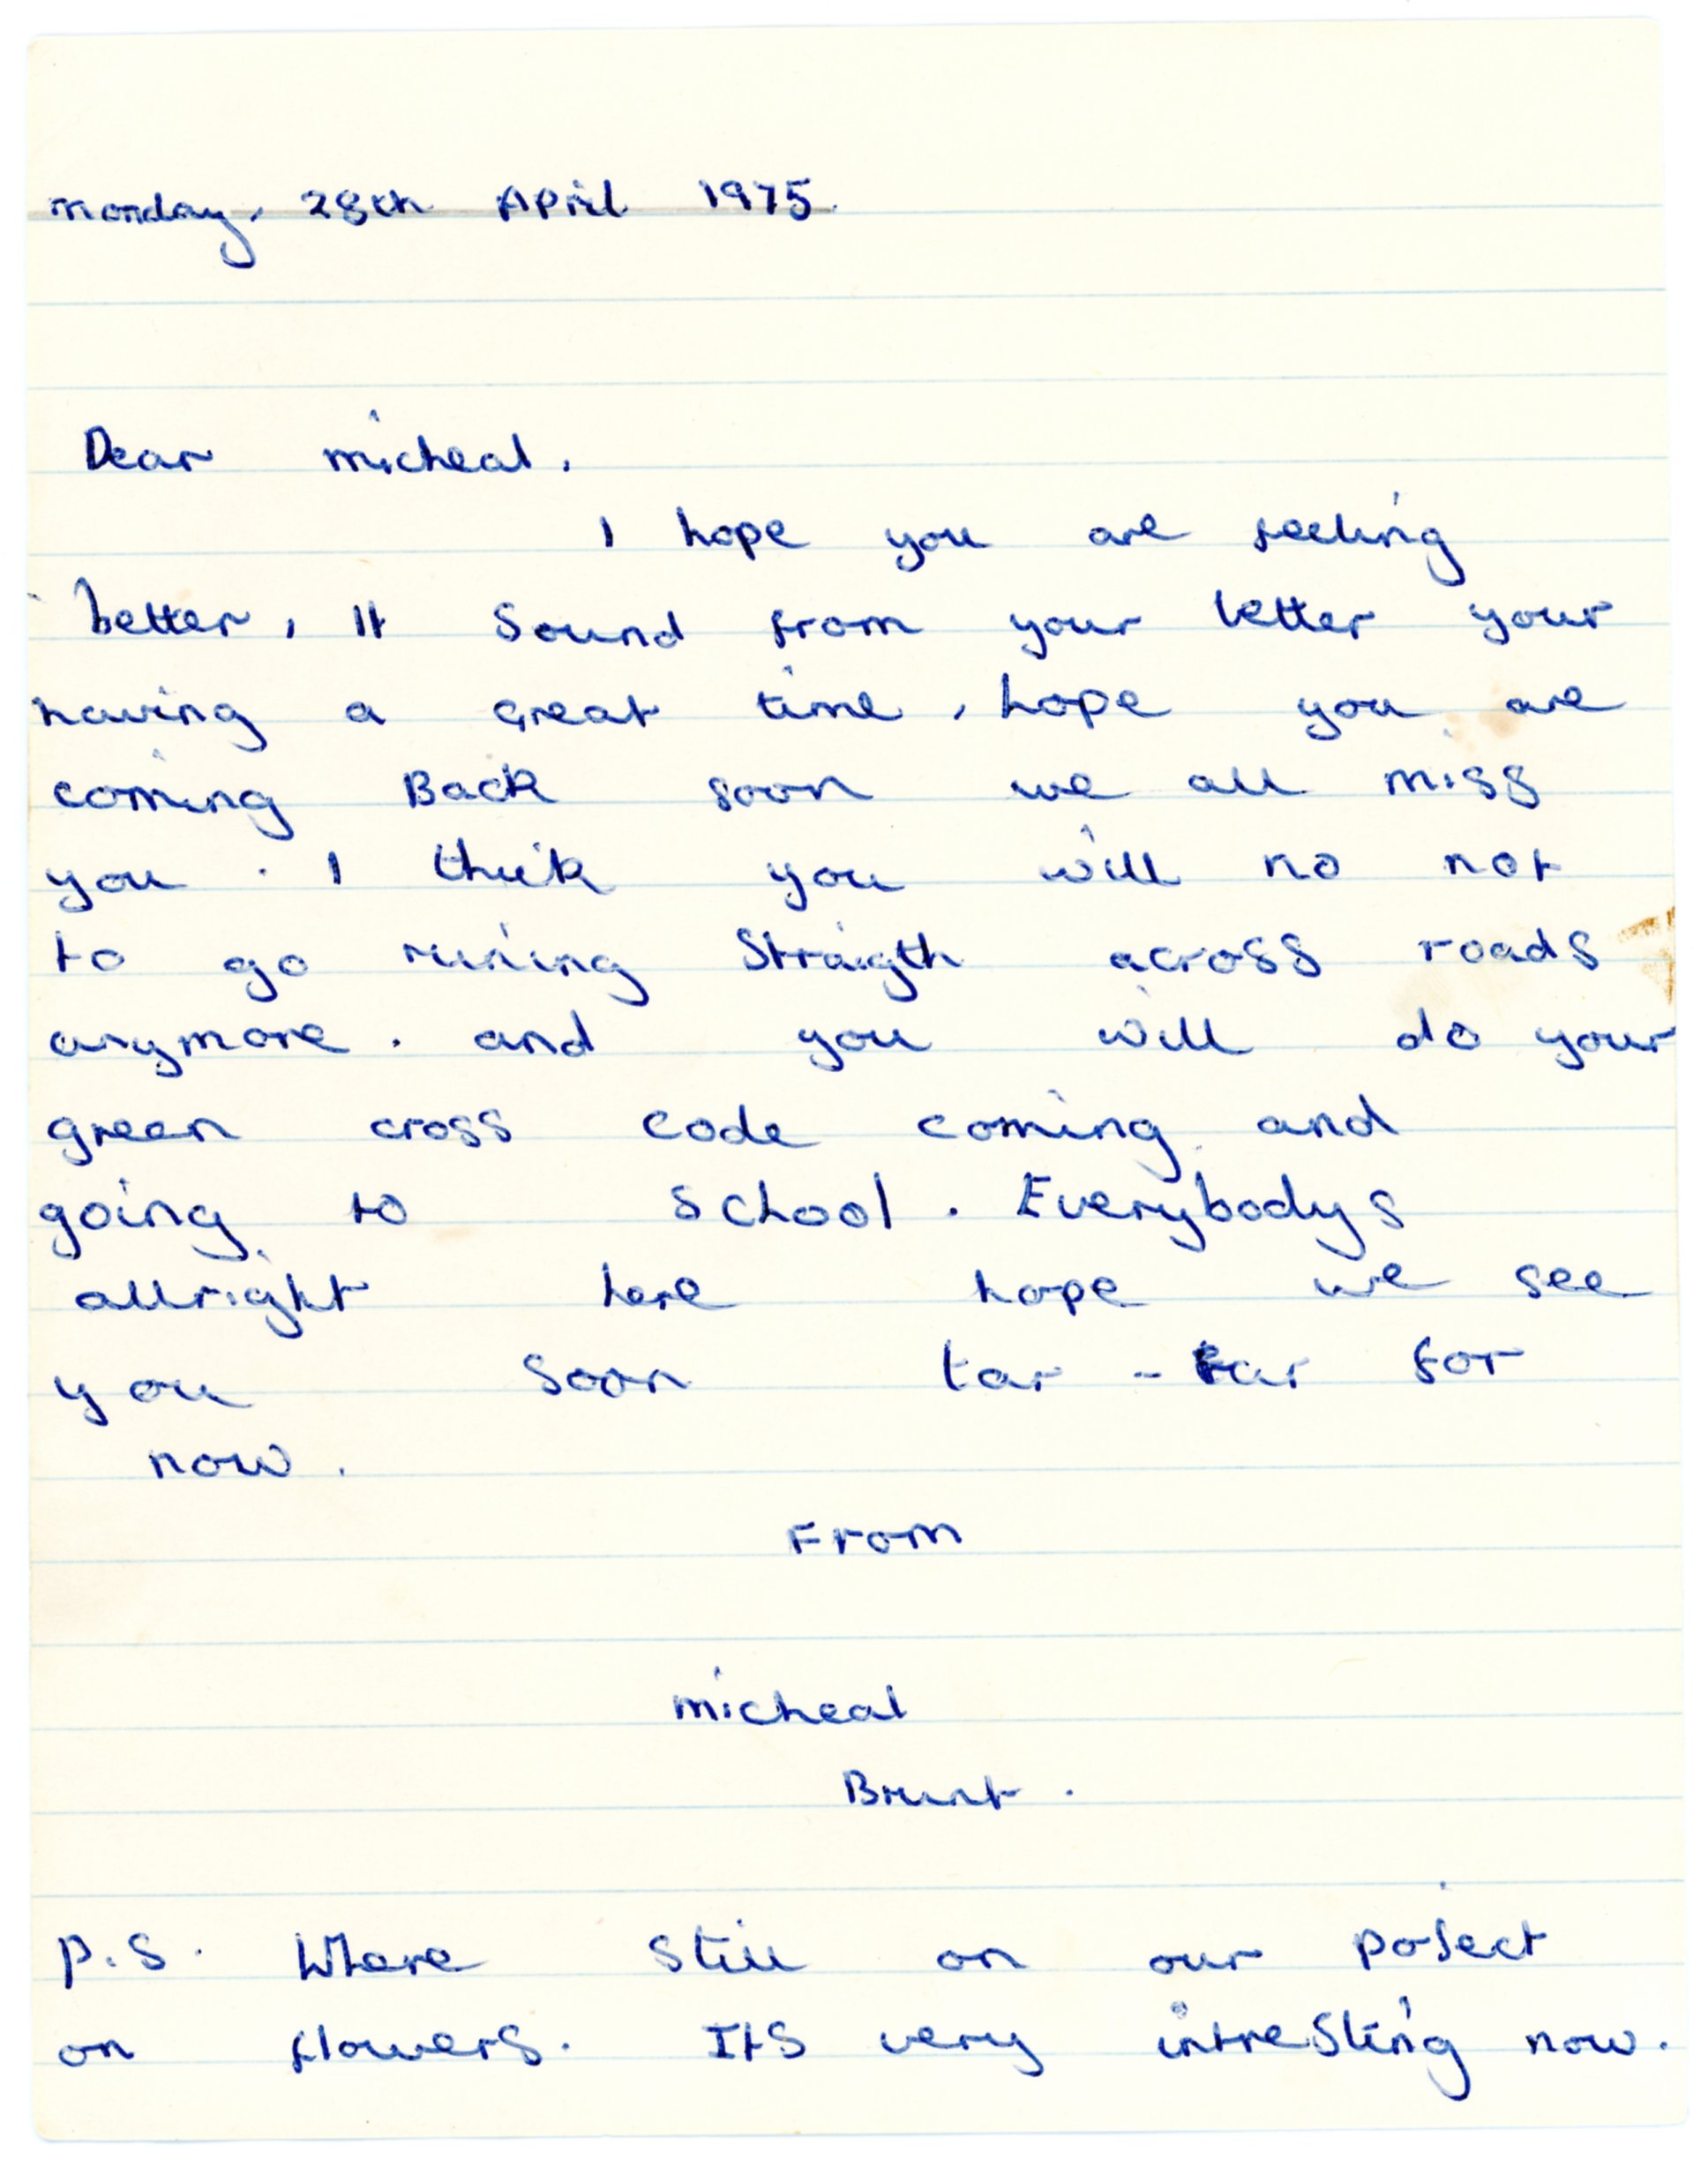 Michael Brunt's original letter